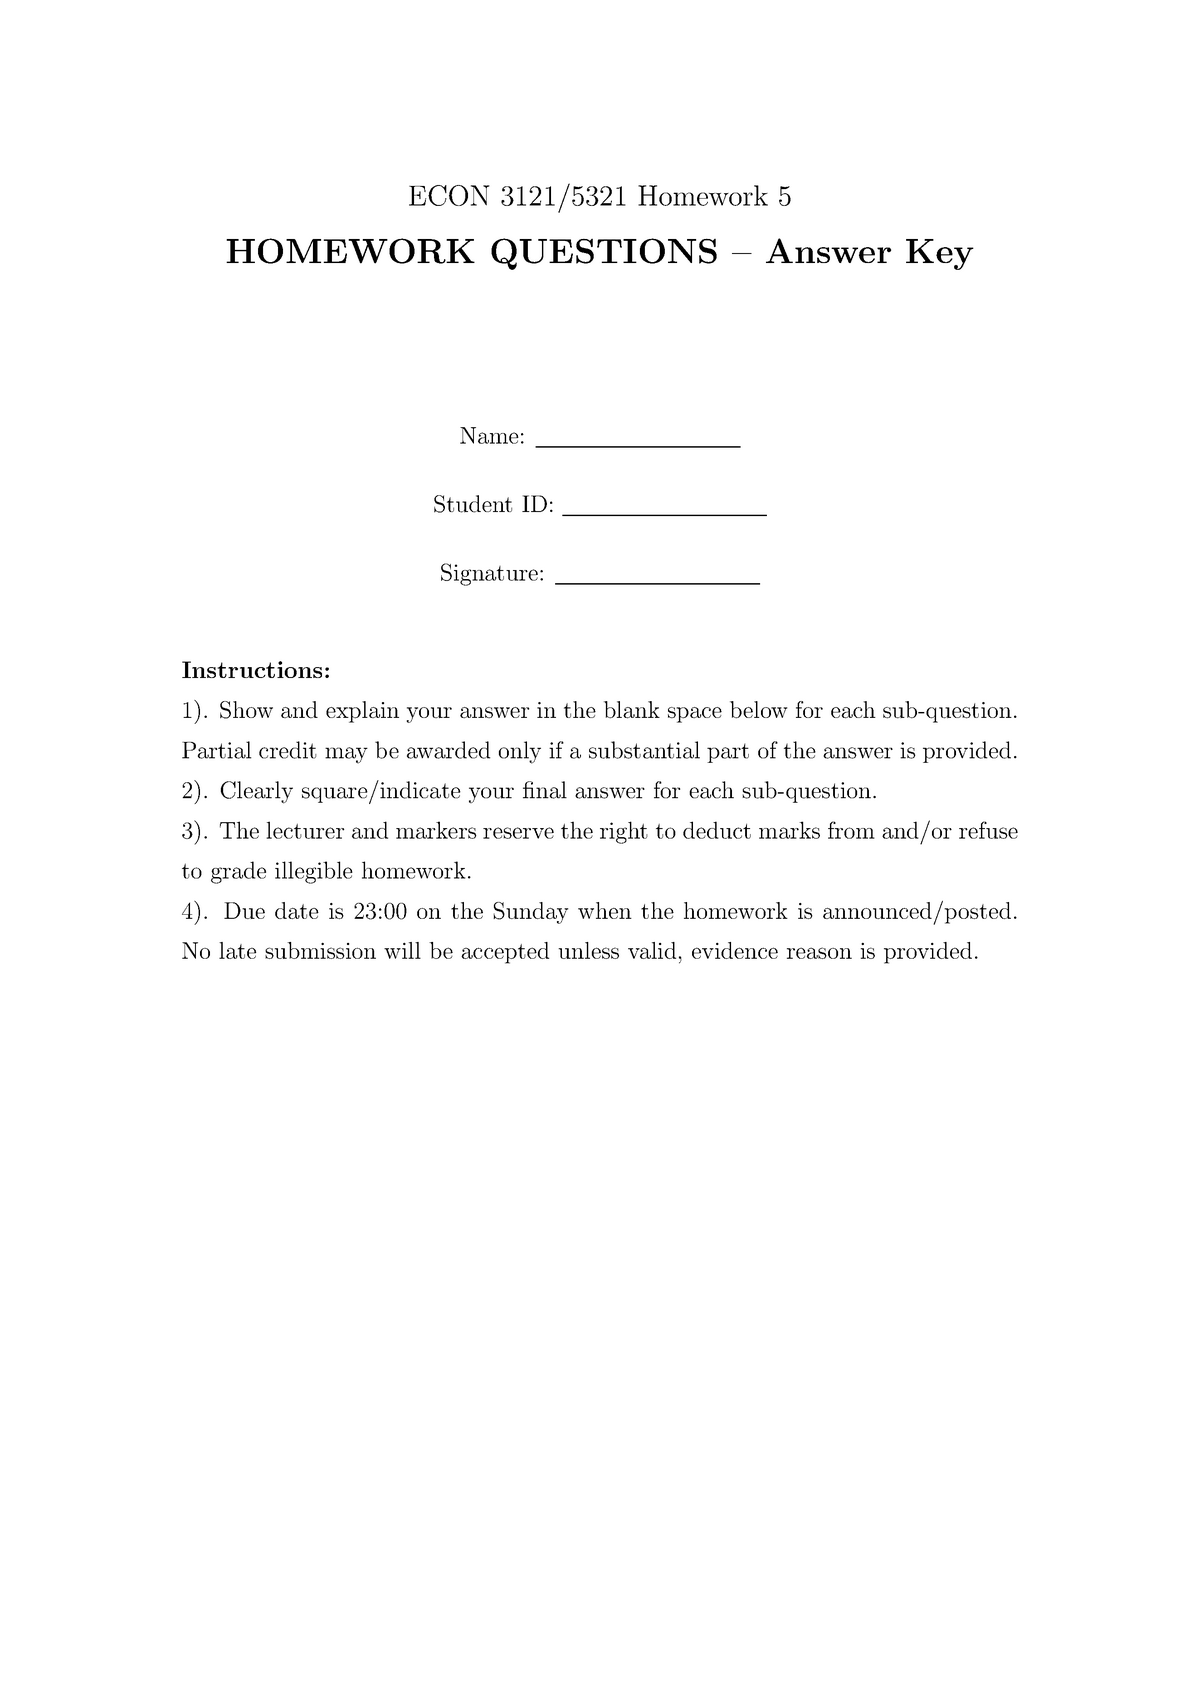 homework 5.4 answer key